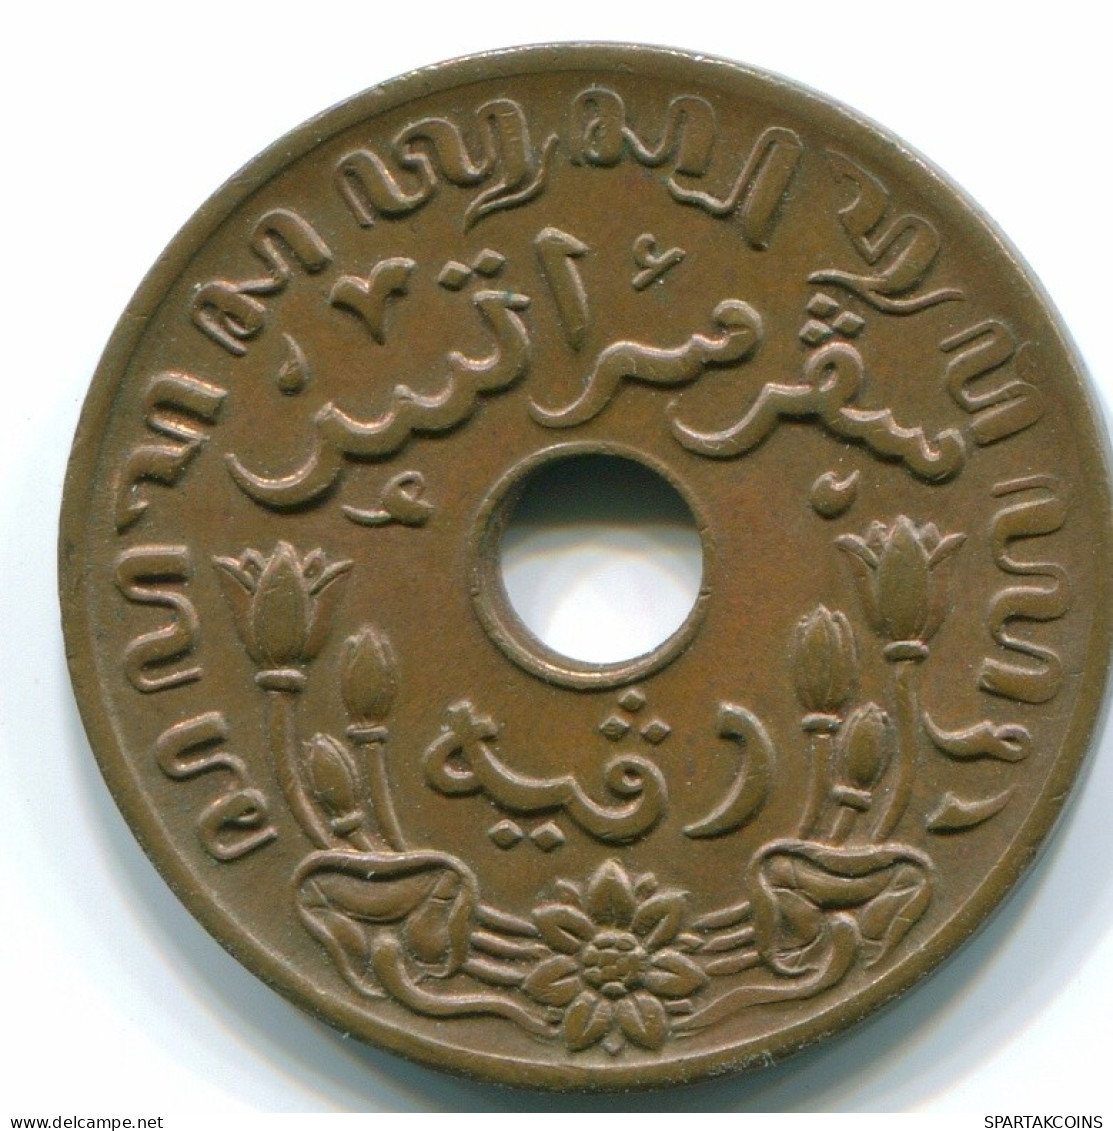 1 CENT 1945 P INDES ORIENTALES NÉERLANDAISES INDONÉSIE INDONESIA Bronze Colonial Pièce #S10444.F.A - Niederländisch-Indien